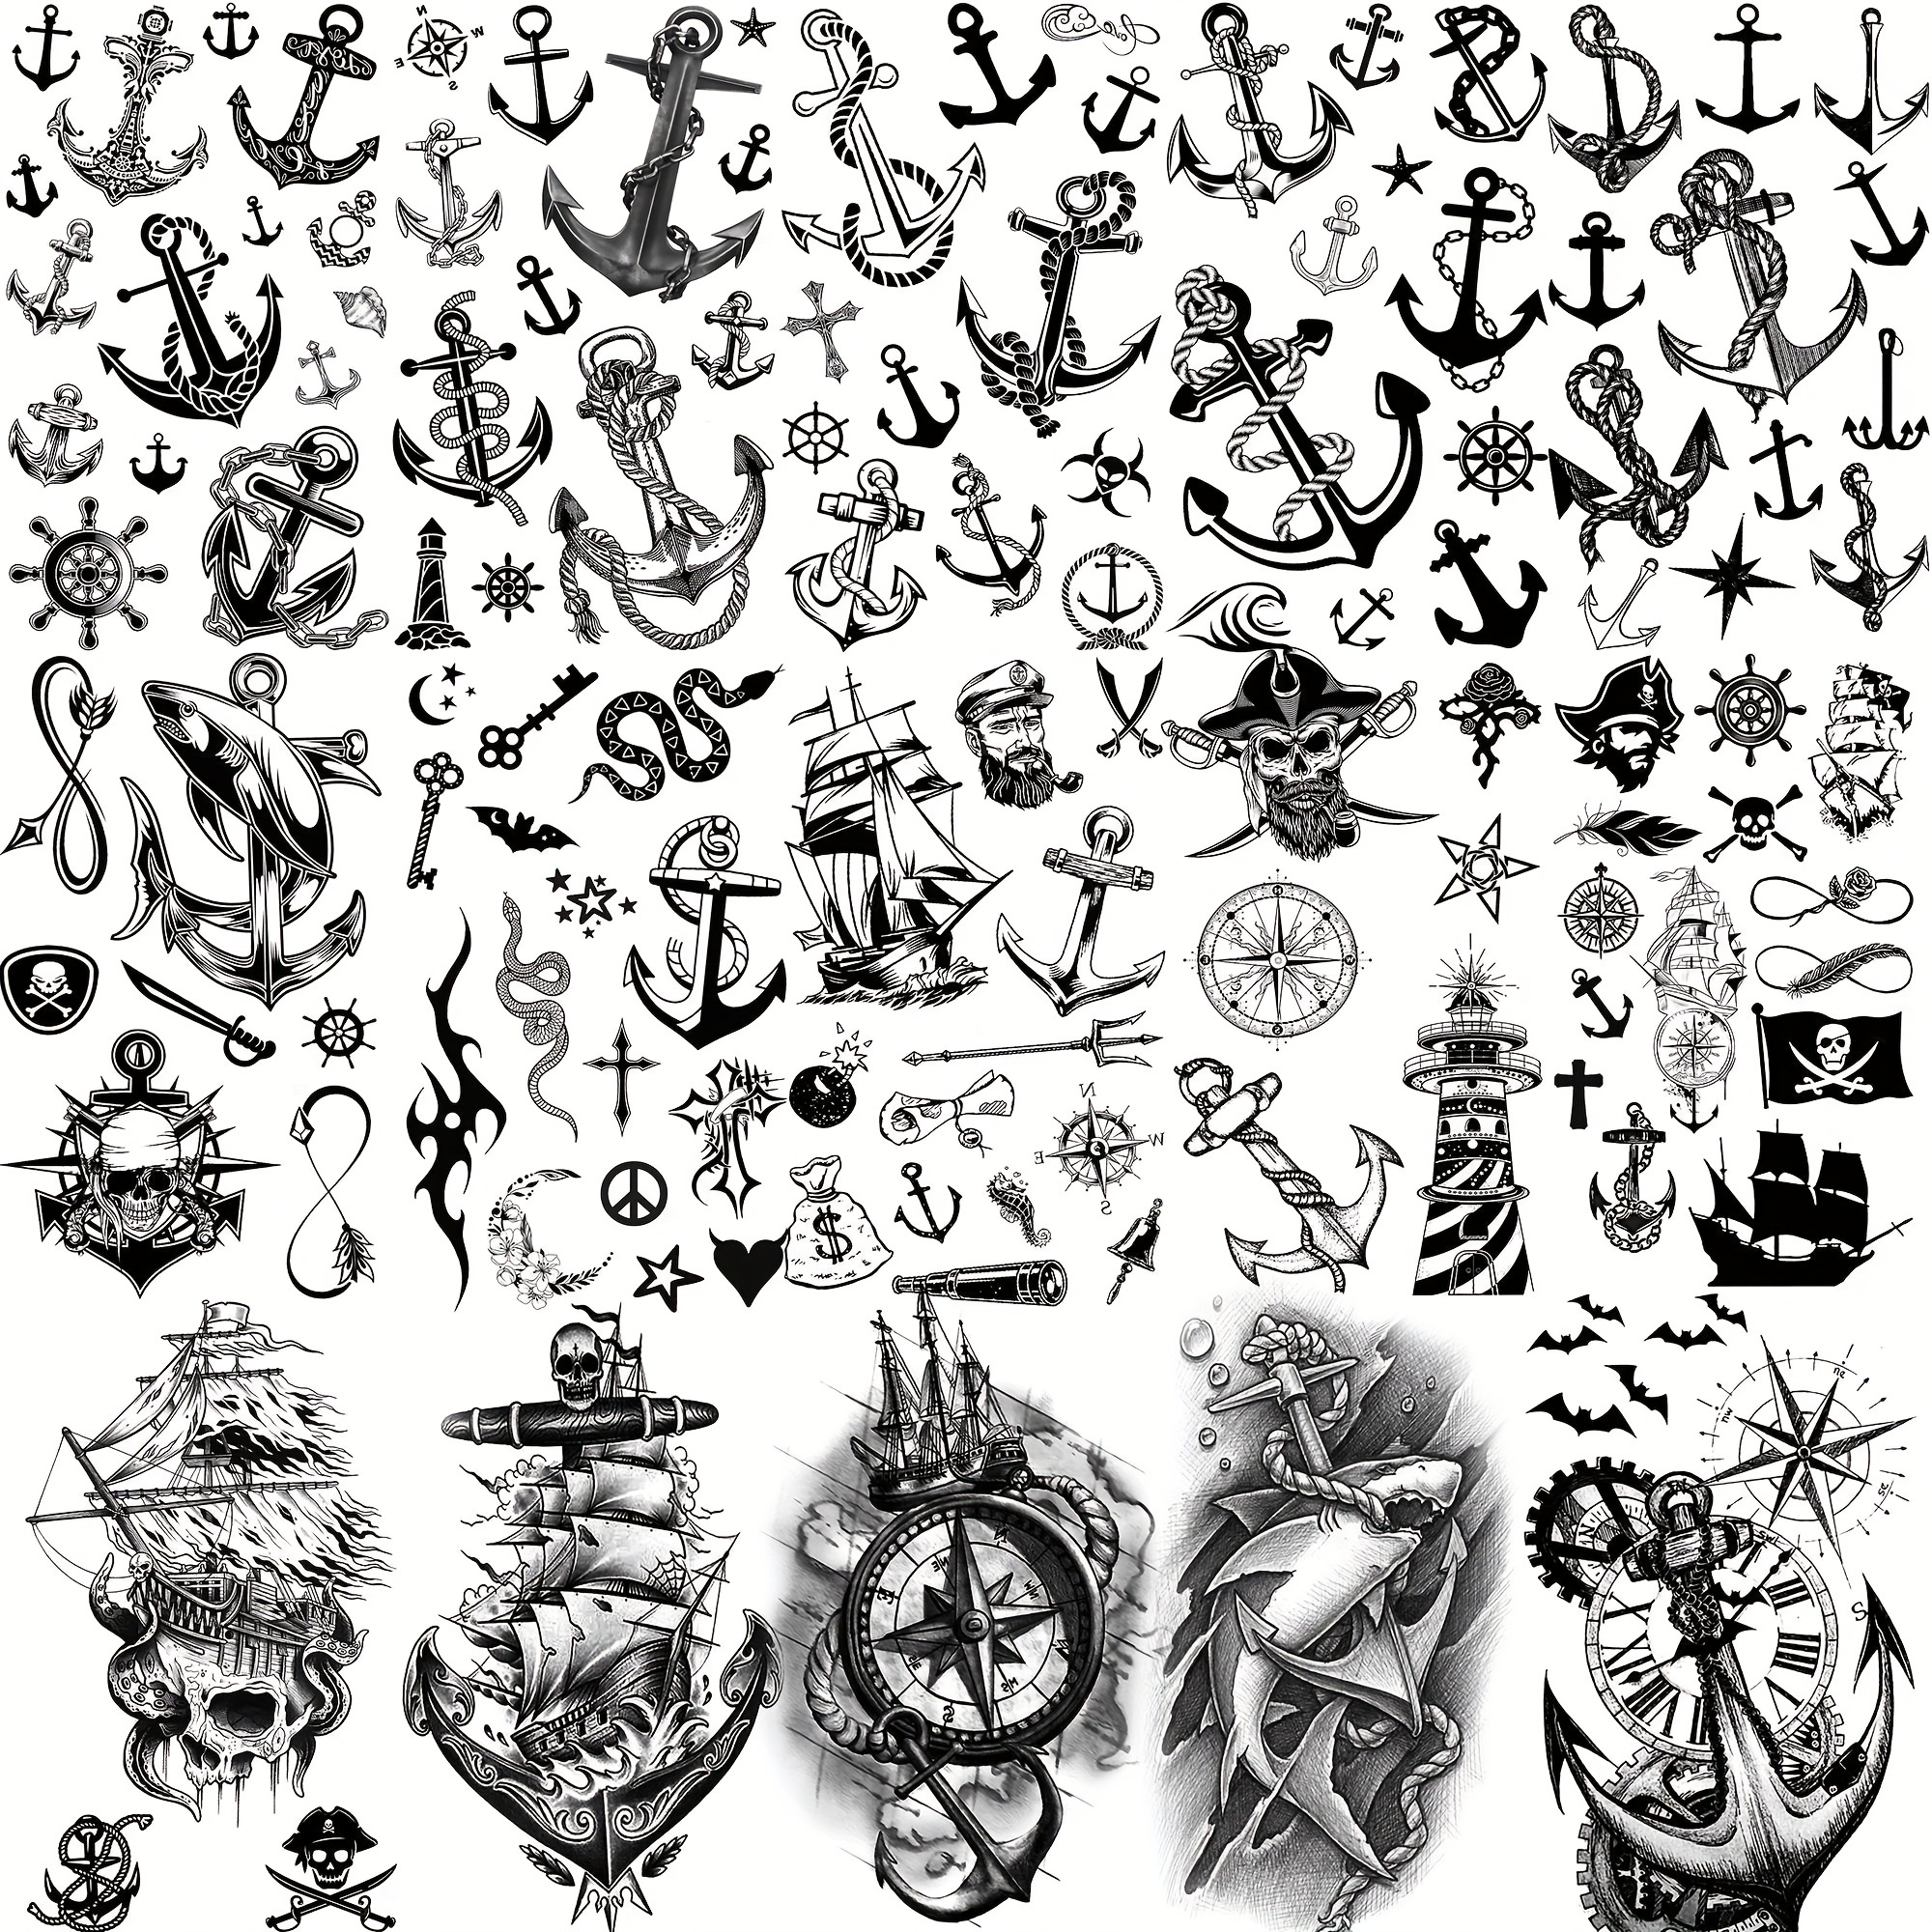 Semi Permanent Realistic Dragon Tattoos, 6-Sheet 100% Plant-Based Ink  Infinity Animal Tattoo Stickers, 2 Weeks Long Last Waterproof Tattoos for  Adults